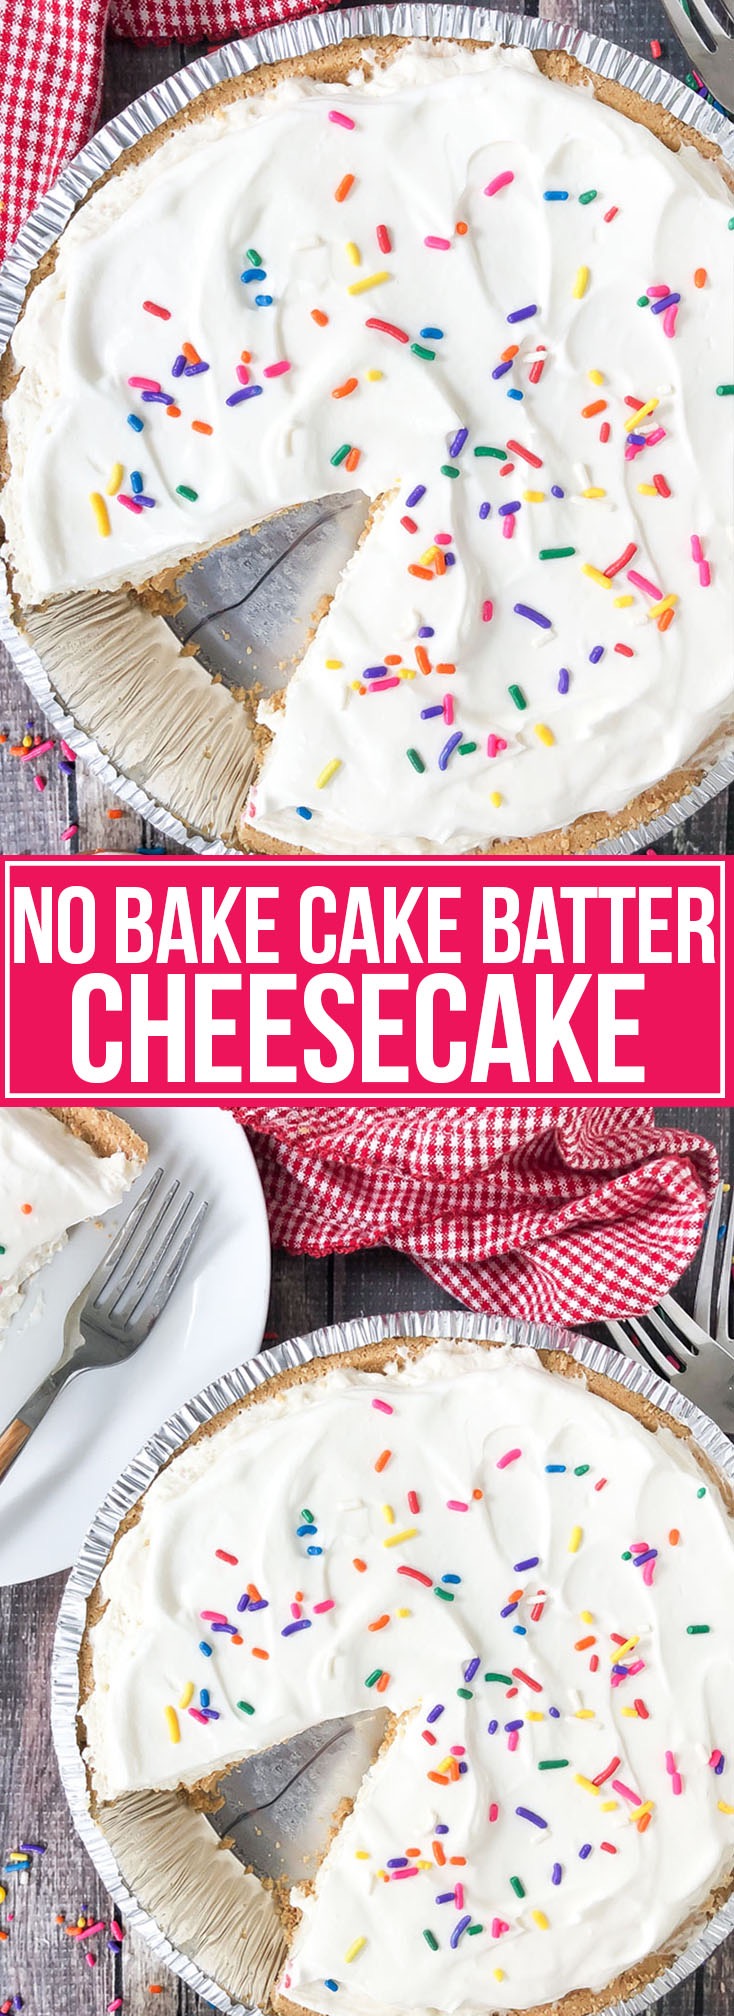 NO BAKE CAKE BATTER CHEESECAKE